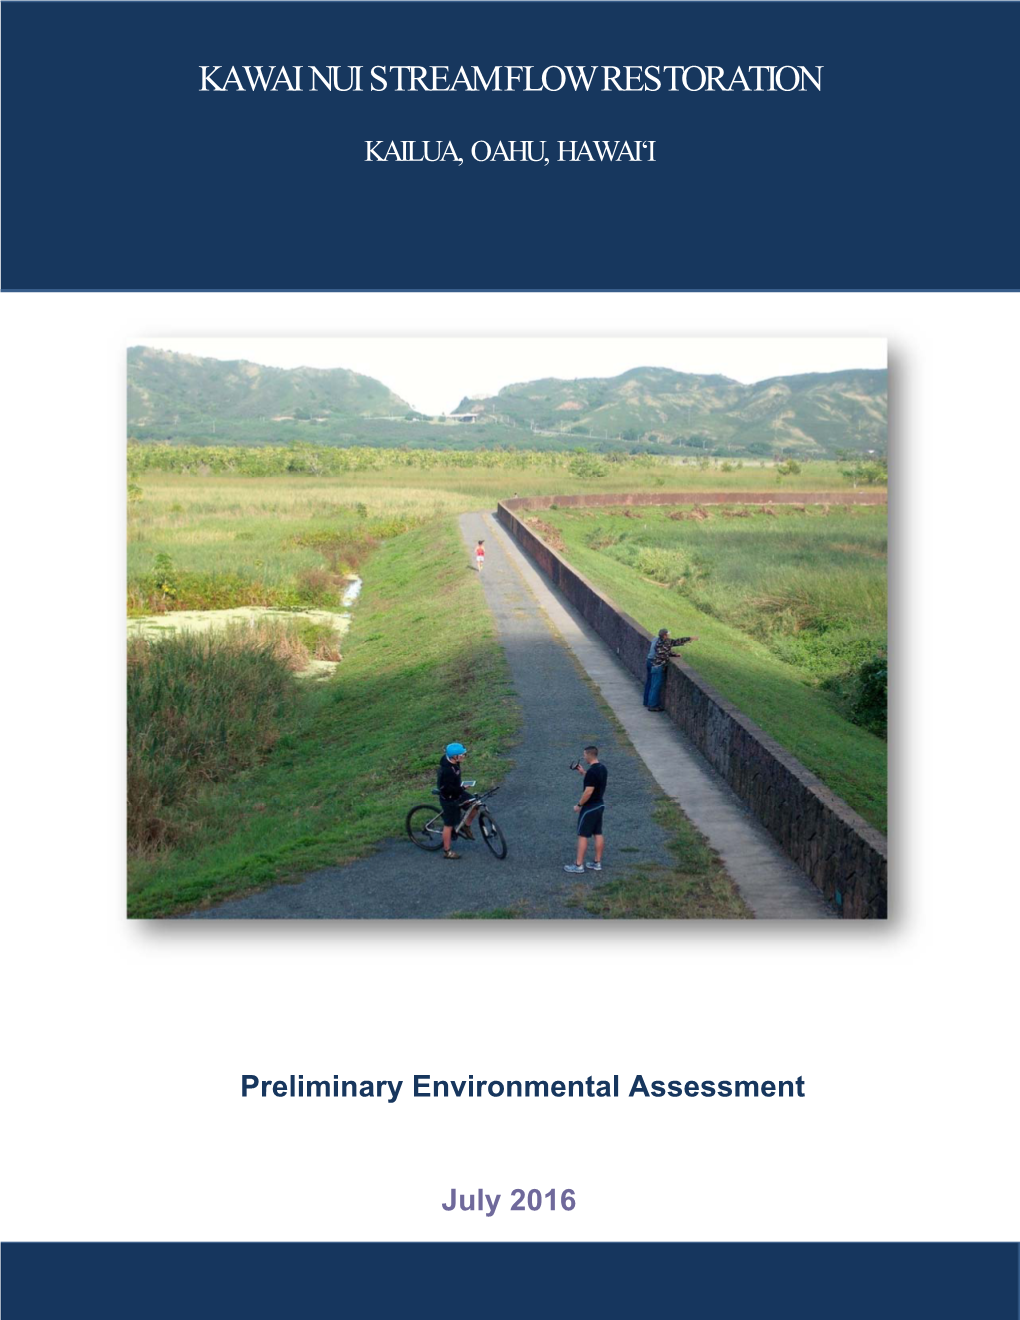 Kawai Nui Final Environmental Assessment